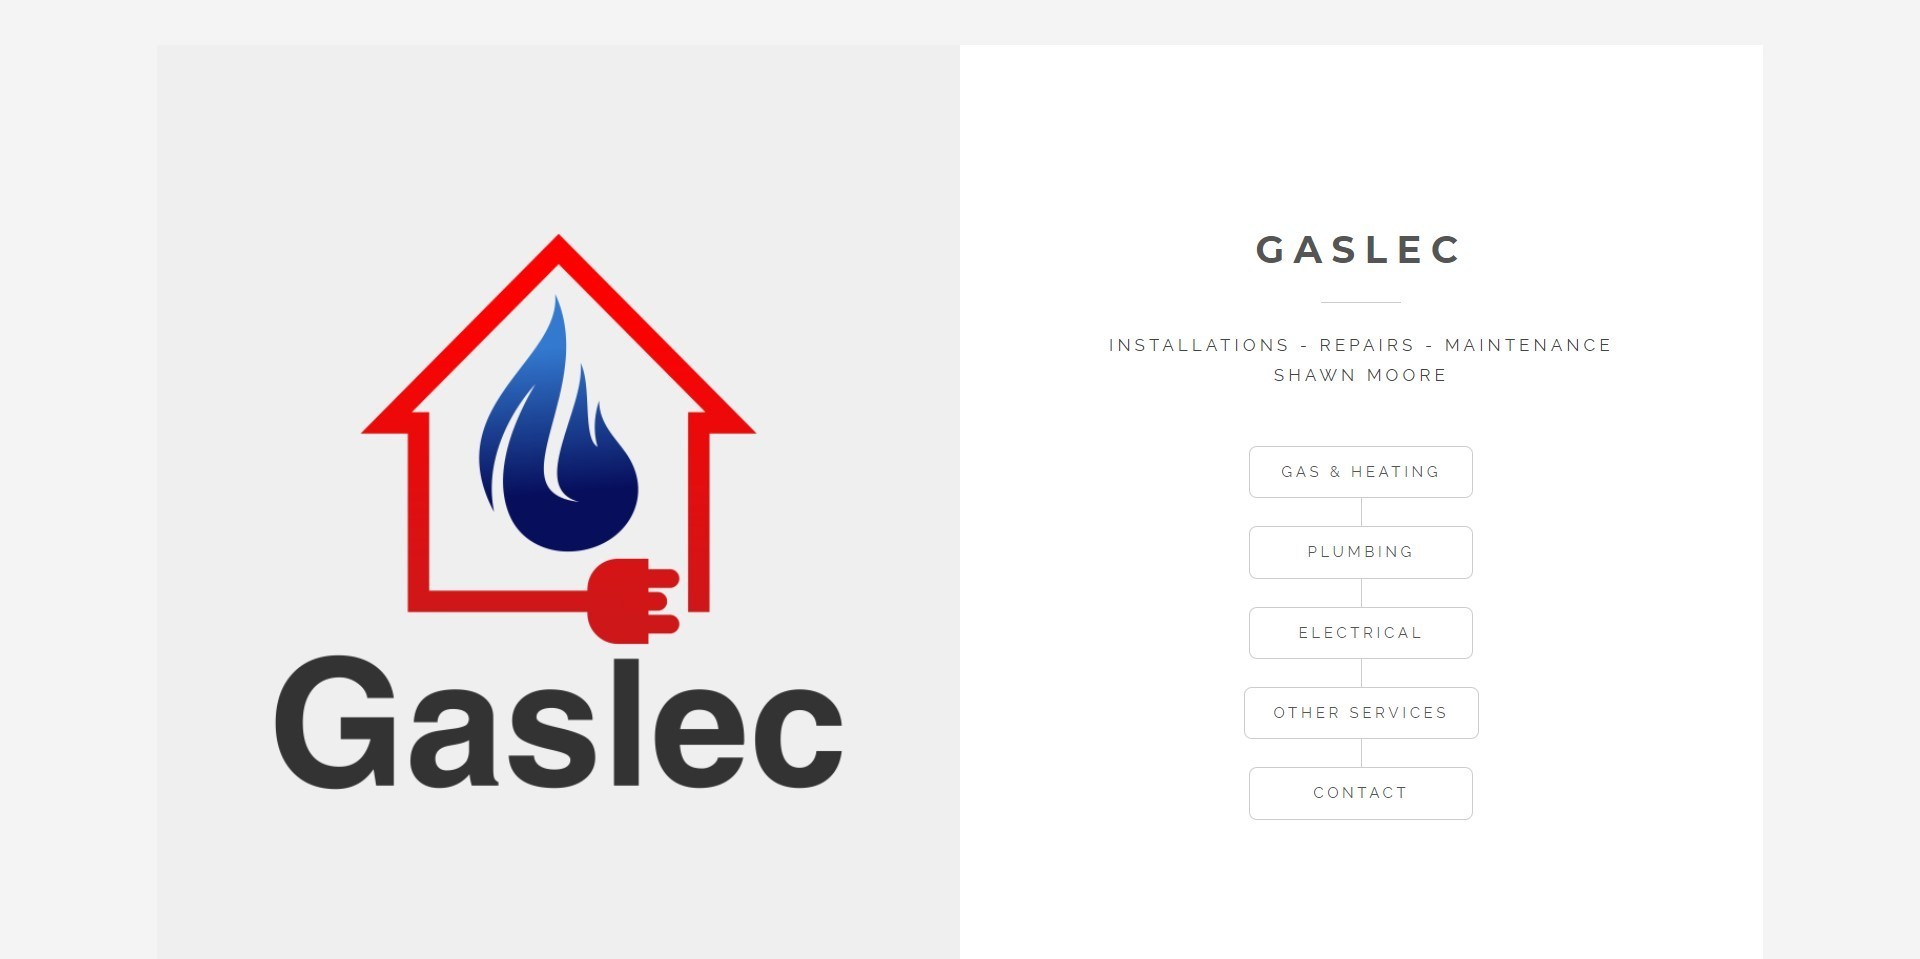 The new Gaslec, designed by it'seeze, website shown on desktop